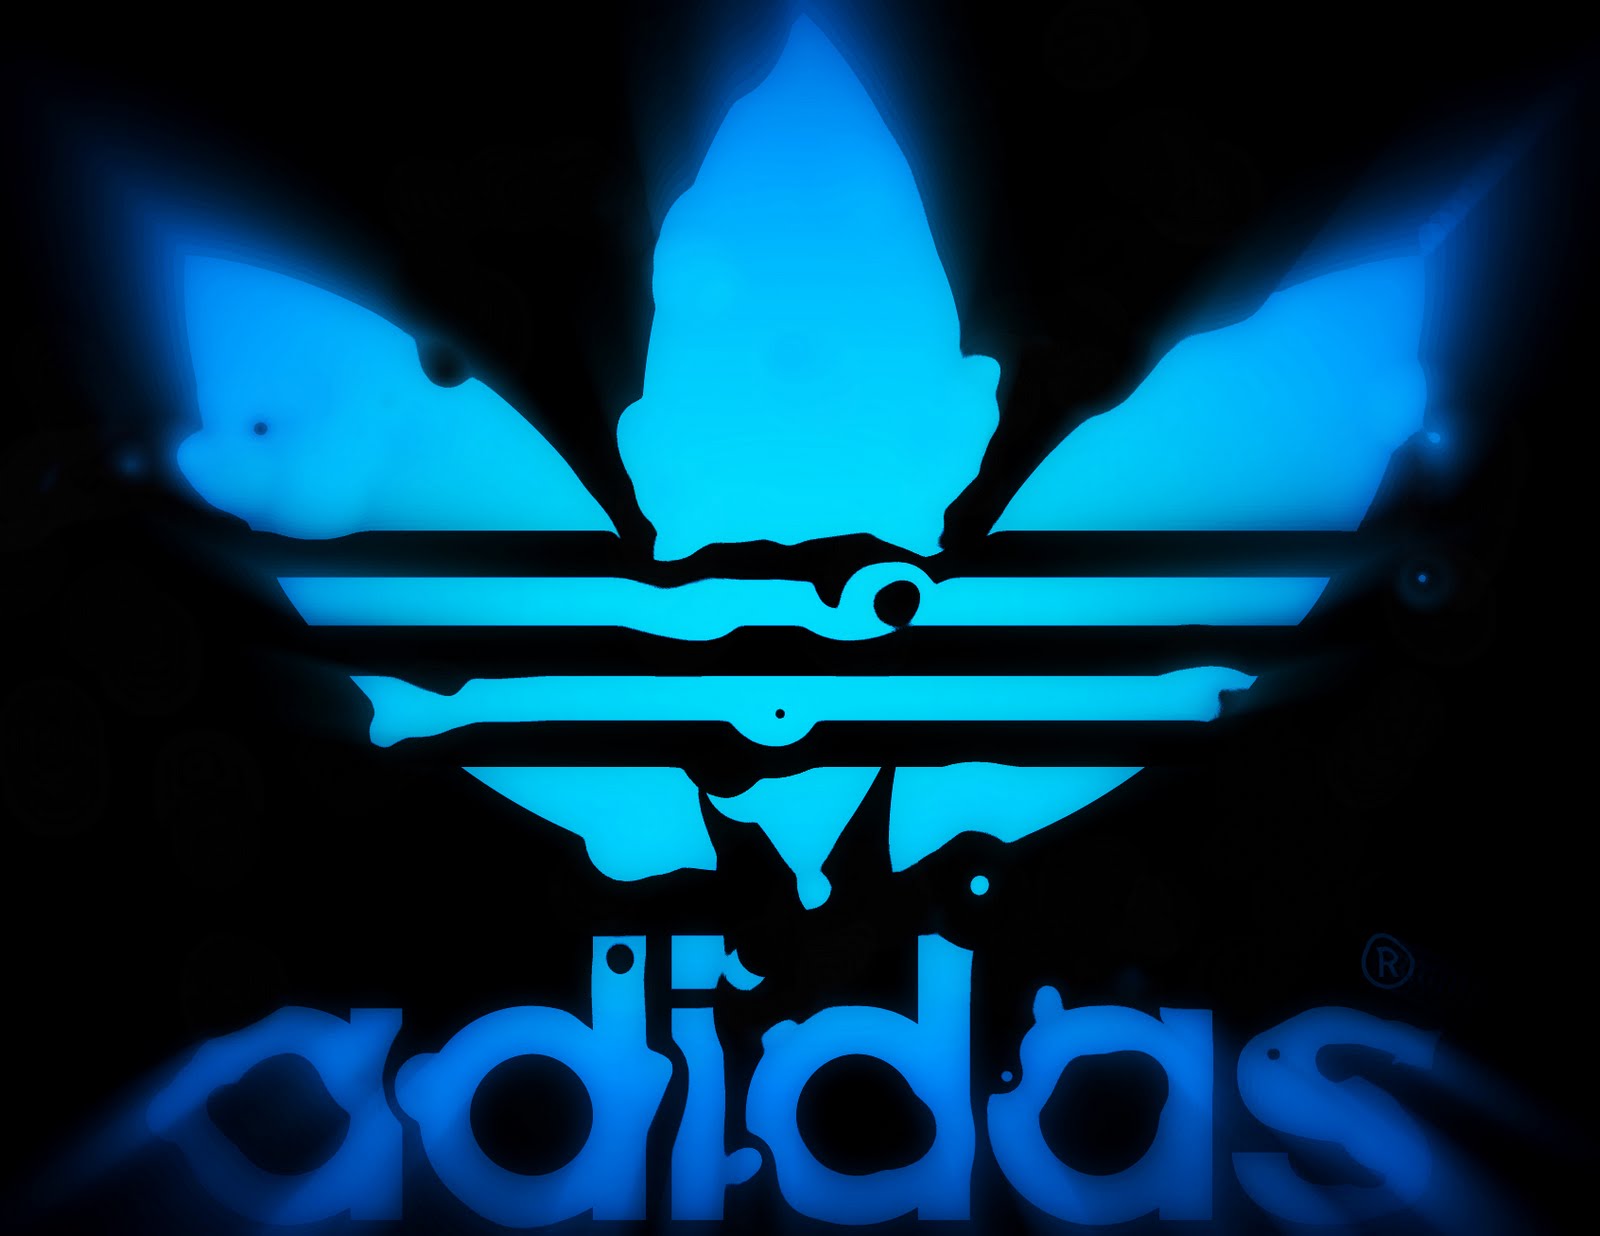 Blue Adidas Logos